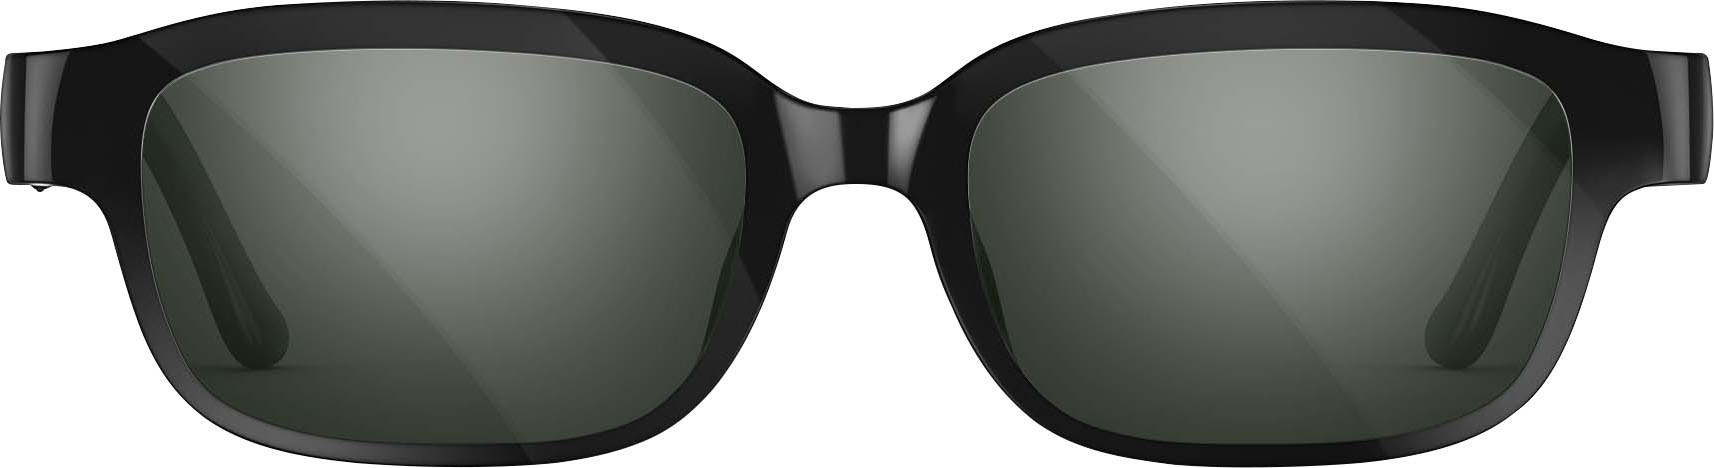 Echo Frames Sunglasses Review: $50 Off New Smart Glasses Deal